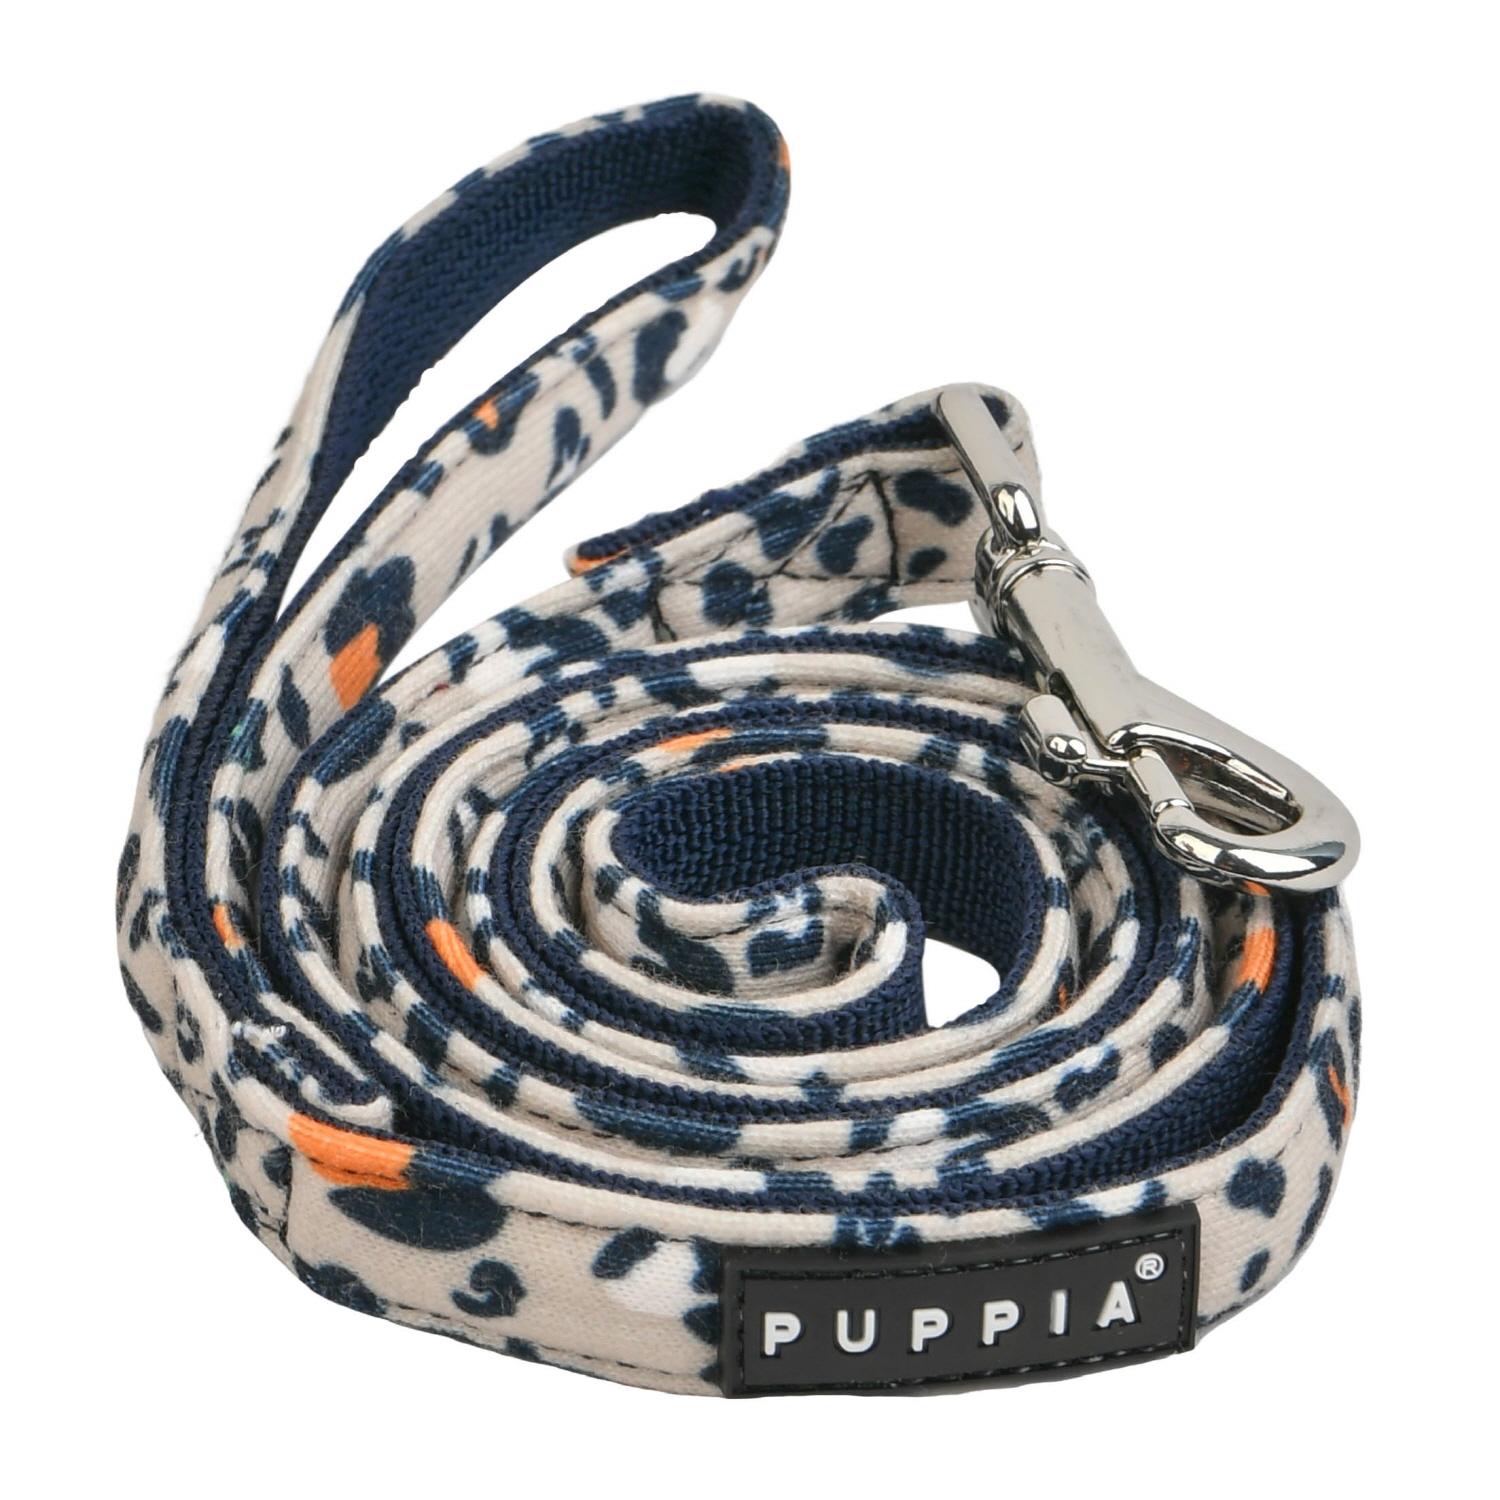 Elyse Dog Leash by Puppia - Navy